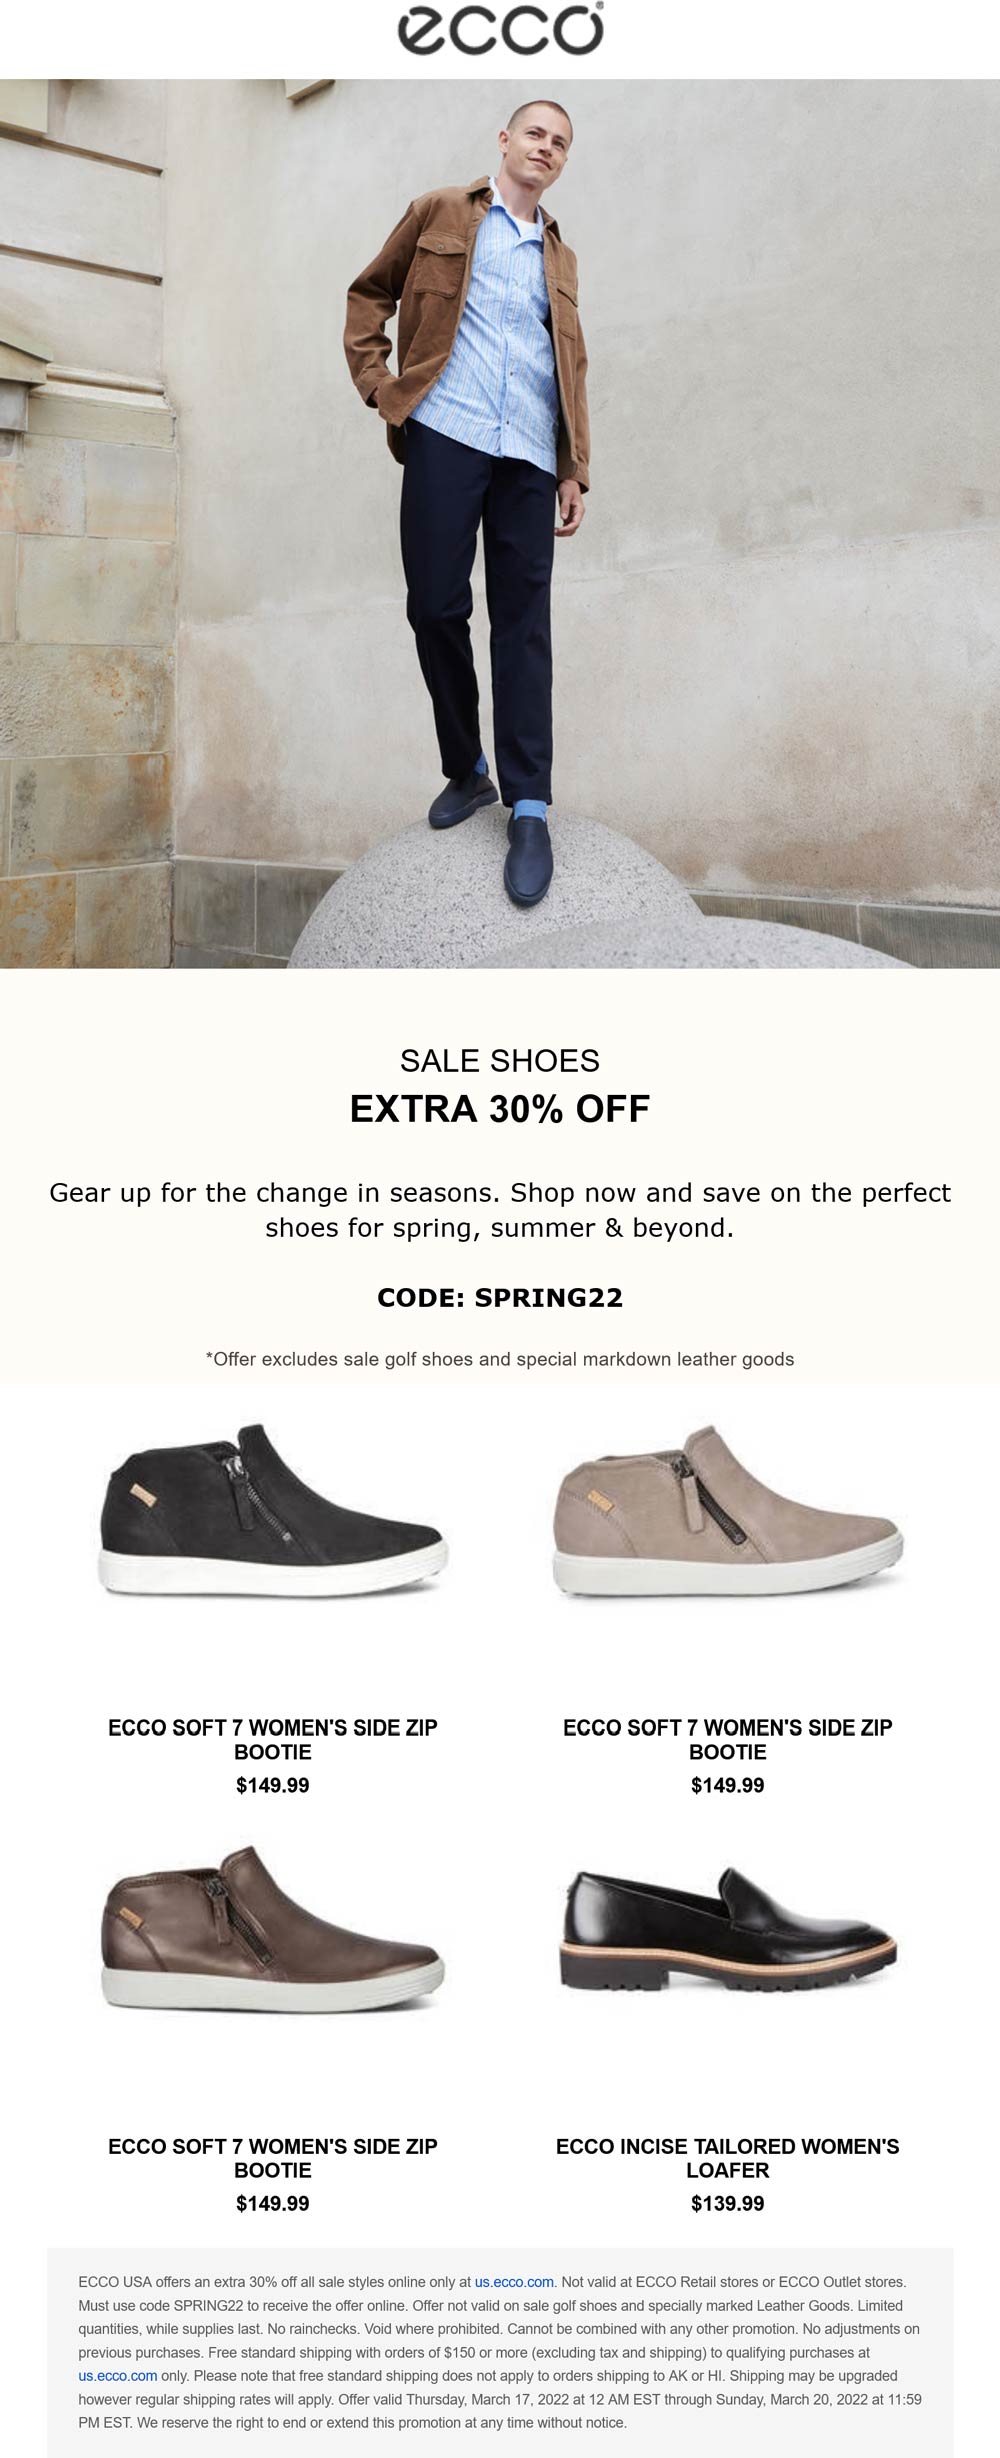 ECCO stores Coupon  Extra 30% off sale shoes online at ECCO via promo code SPRING22 #ecco 